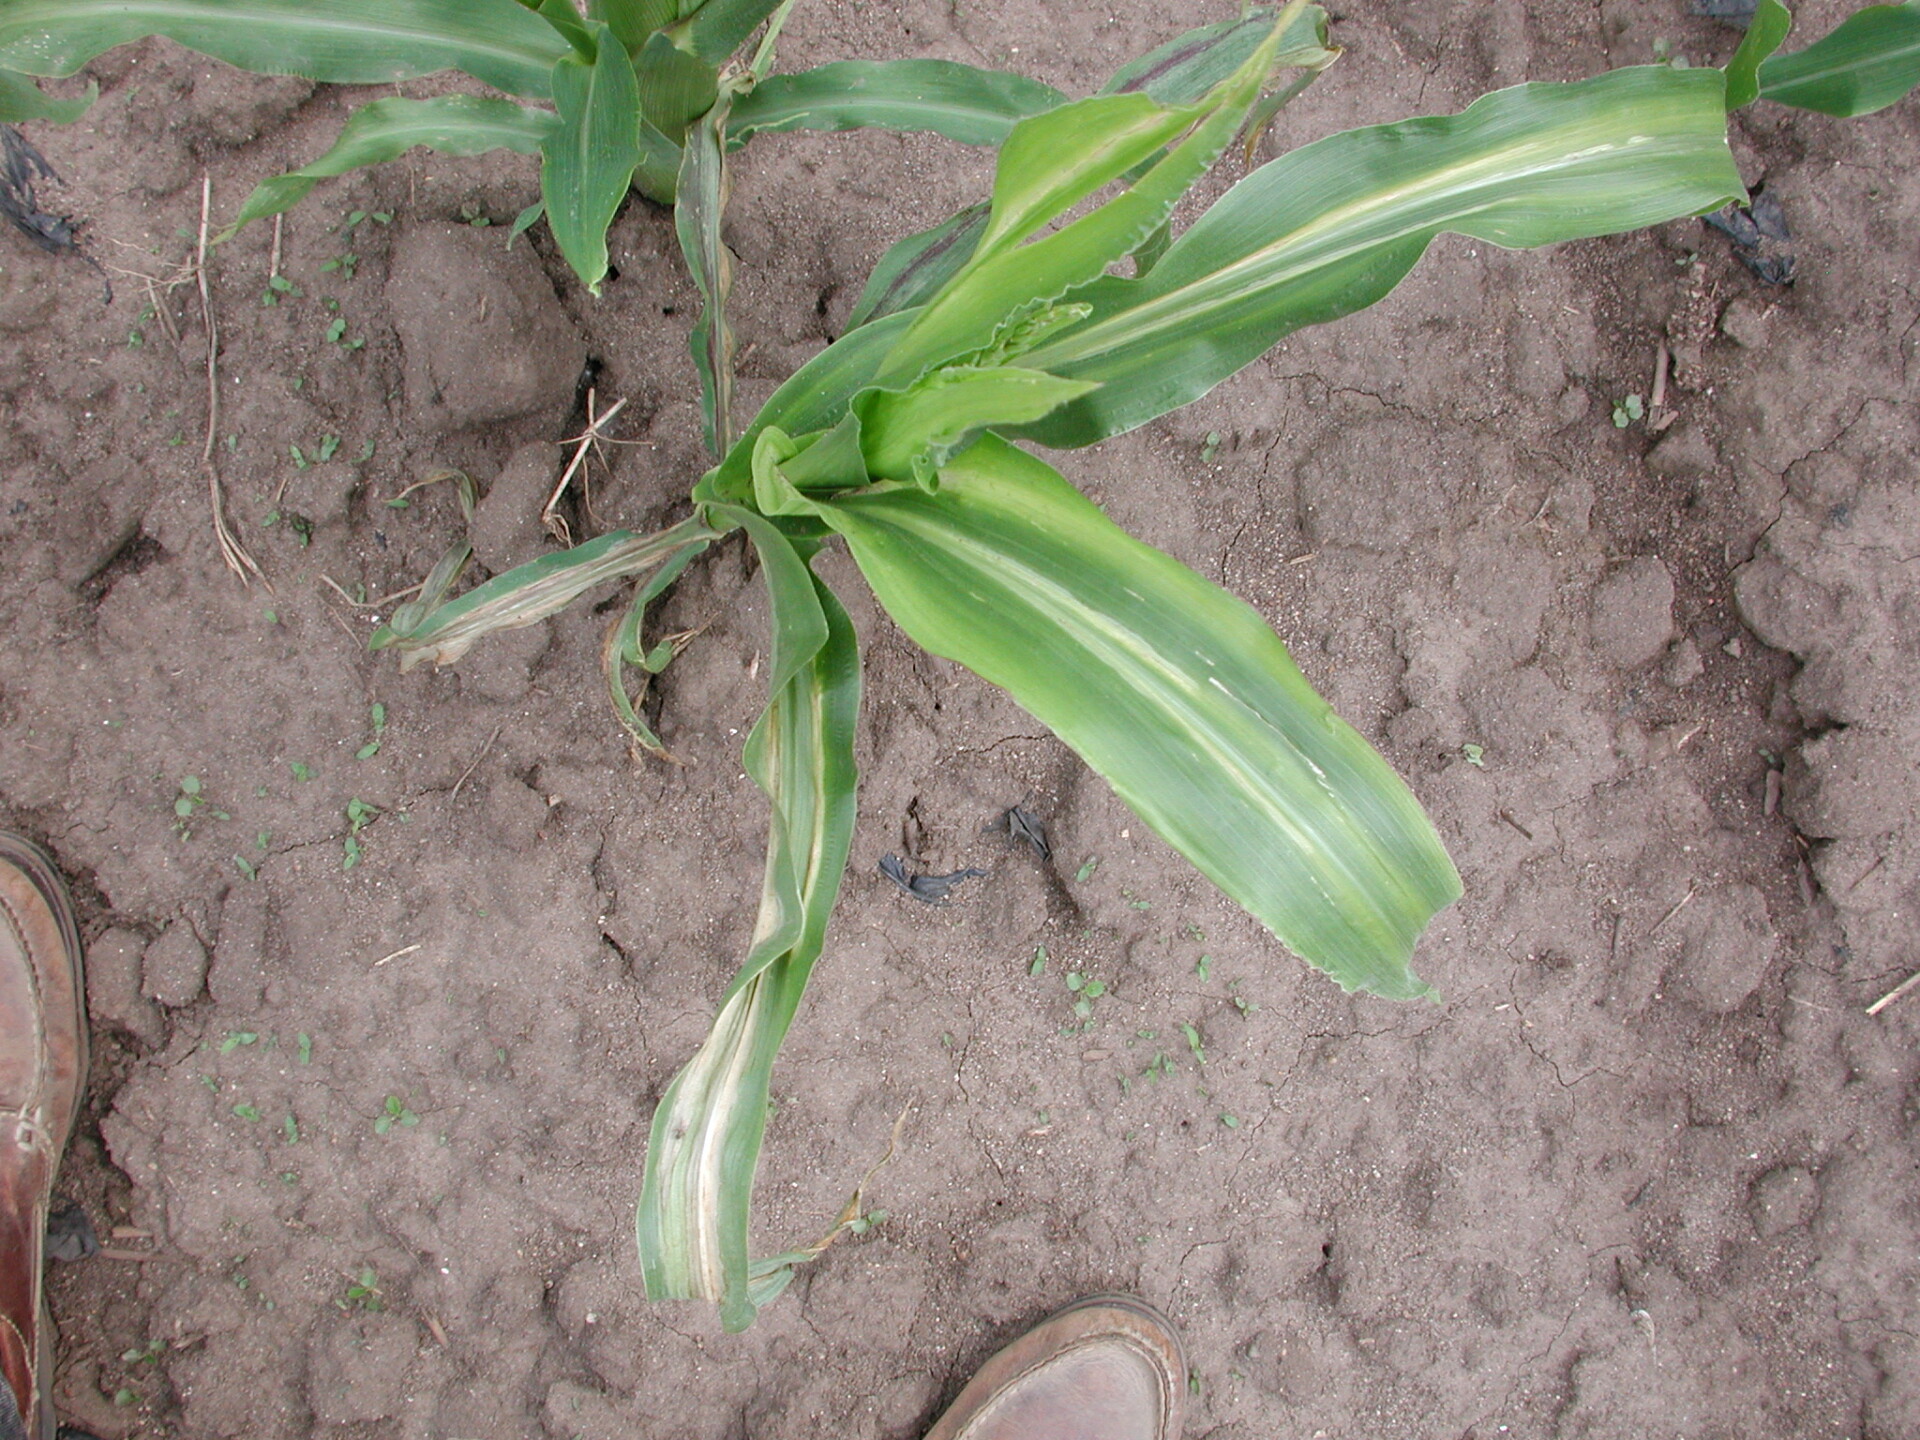 stewart’s wilt of sweet corn. Note lesions streaked through leaves.